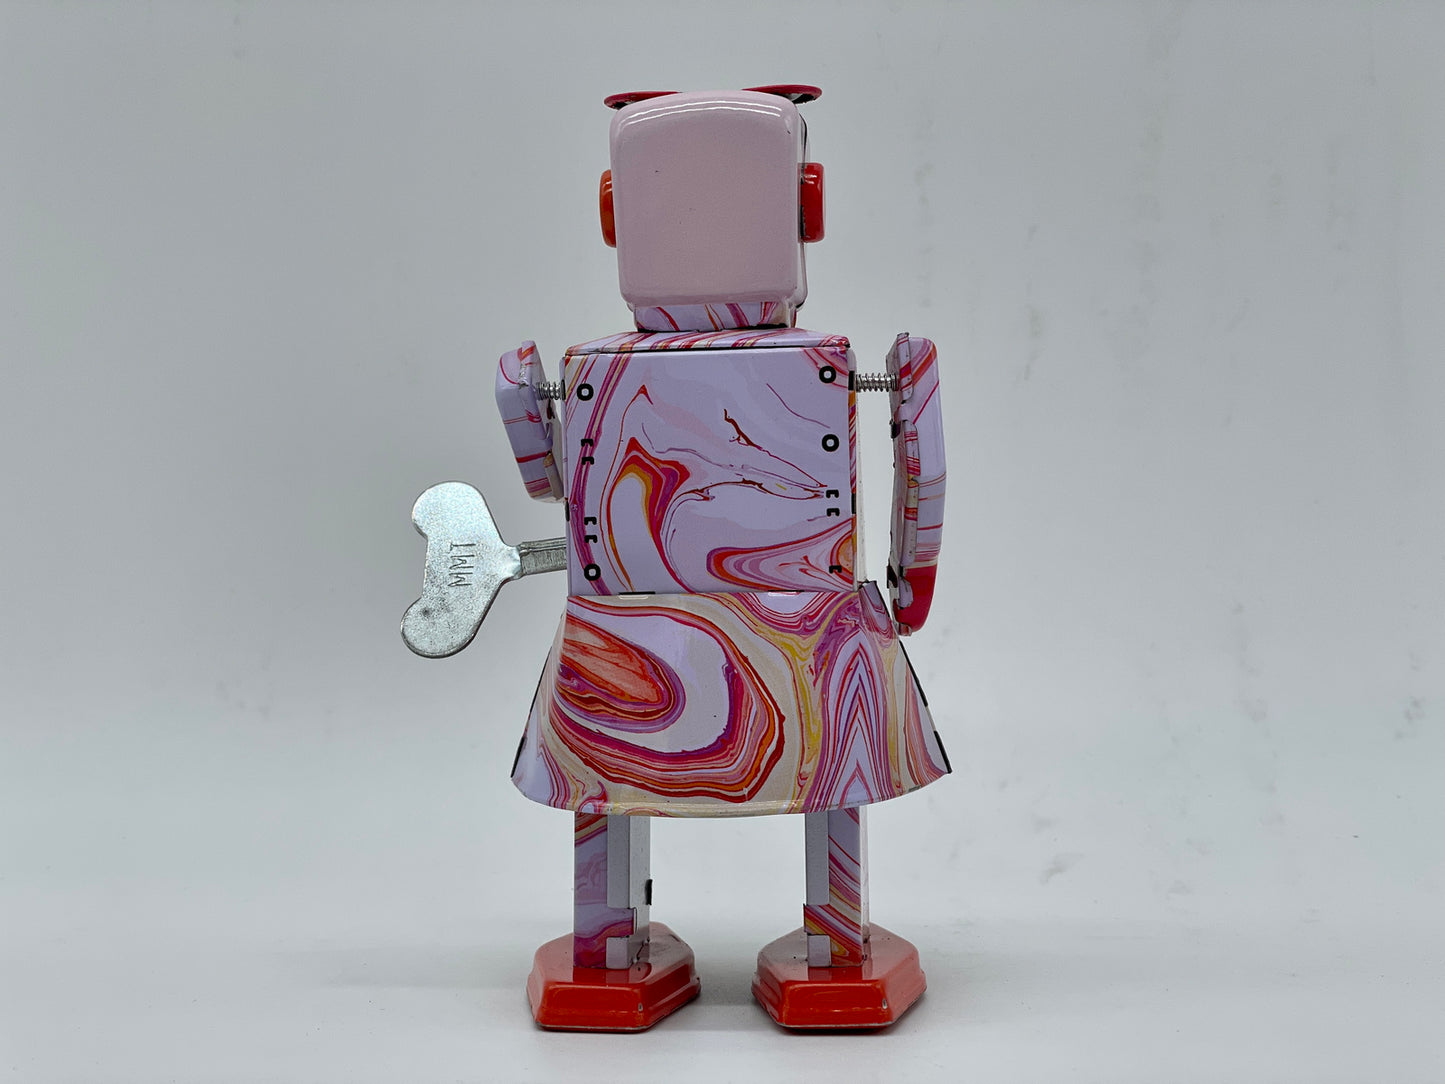 Robot Ripplebot